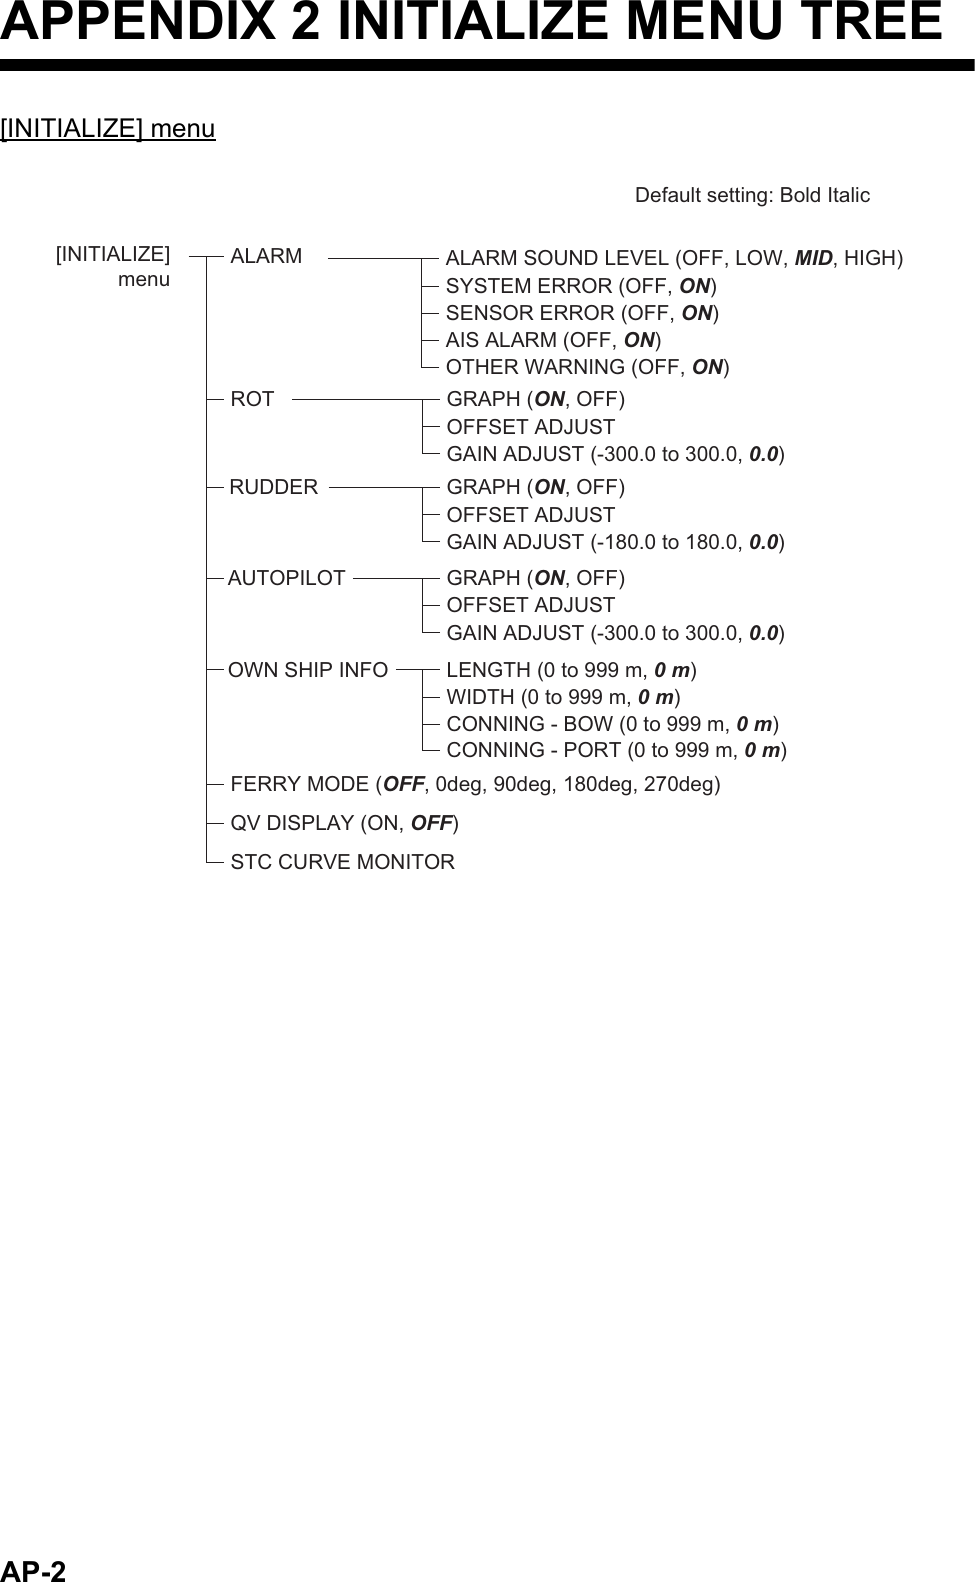 AP-2APPENDIX 2 INITIALIZE MENU TREE[INITIALIZE] menu[INITIALIZE] menuALARMROTRUDDERAUTOPILOTOWN SHIP INFOFERRY MODE (OFF, 0deg, 90deg, 180deg, 270deg)QV DISPLAY (ON, OFF)STC CURVE MONITORSYSTEM ERROR (OFF, ON)ALARM SOUND LEVEL (OFF, LOW, MID, HIGH)SENSOR ERROR (OFF, ON)AIS ALARM (OFF, ON)OTHER WARNING (OFF, ON)GRAPH (ON, OFF)OFFSET ADJUSTGAIN ADJUST (-300.0 to 300.0, 0.0)GRAPH (ON, OFF)OFFSET ADJUSTGAIN ADJUST (-180.0 to 180.0, 0.0)GRAPH (ON, OFF)OFFSET ADJUSTGAIN ADJUST (-300.0 to 300.0, 0.0)LENGTH (0 to 999 m, 0 m)WIDTH (0 to 999 m, 0 m)CONNING - BOW (0 to 999 m, 0 m)CONNING - PORT (0 to 999 m, 0 m)Default setting: Bold Italic